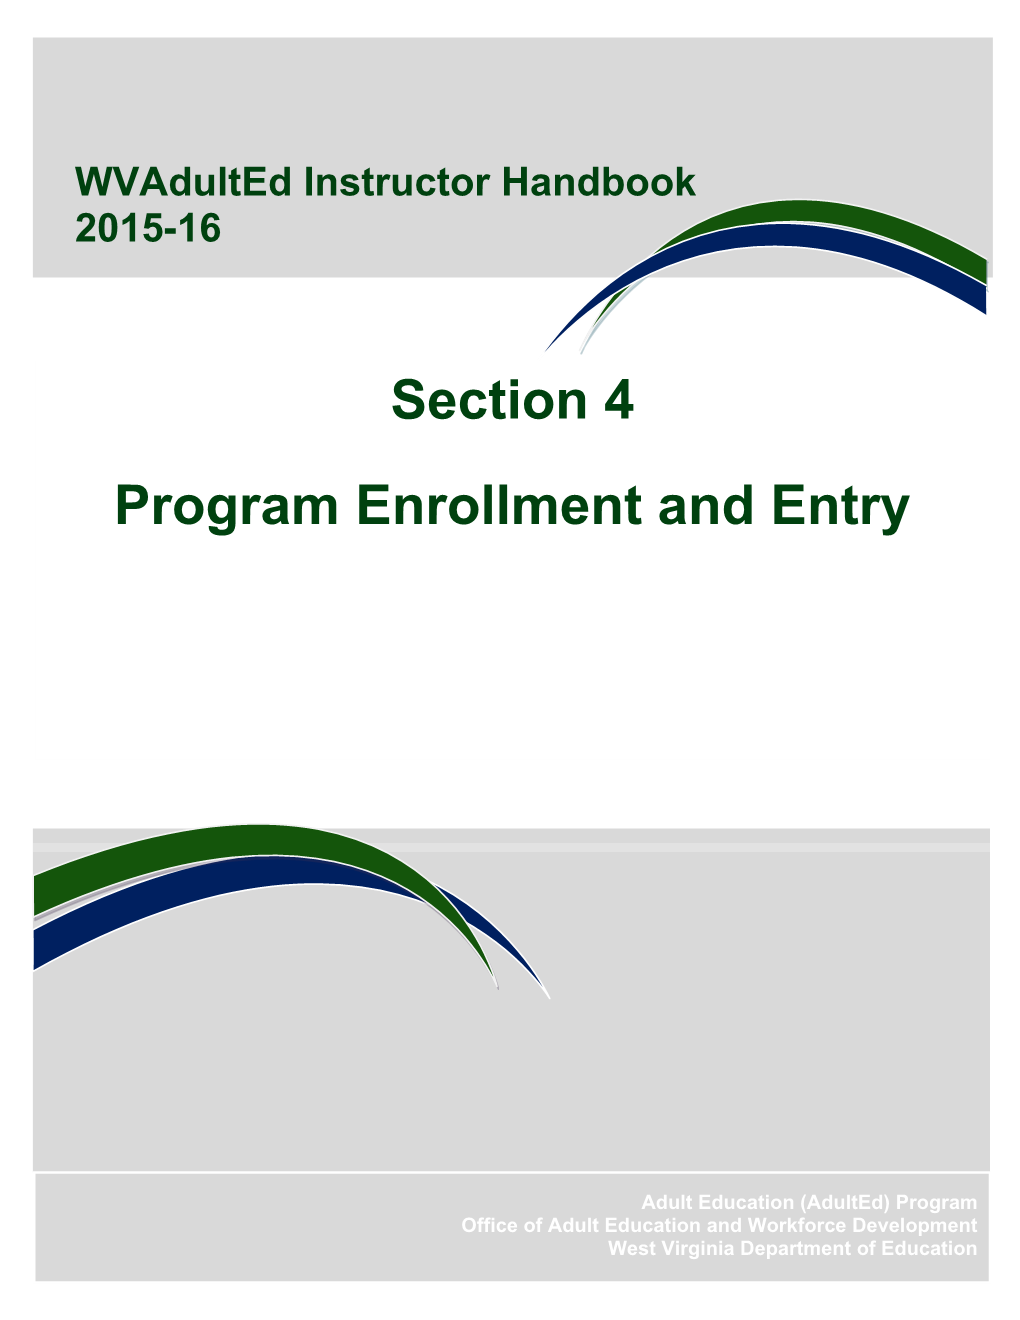 Program Enrollment and Entry